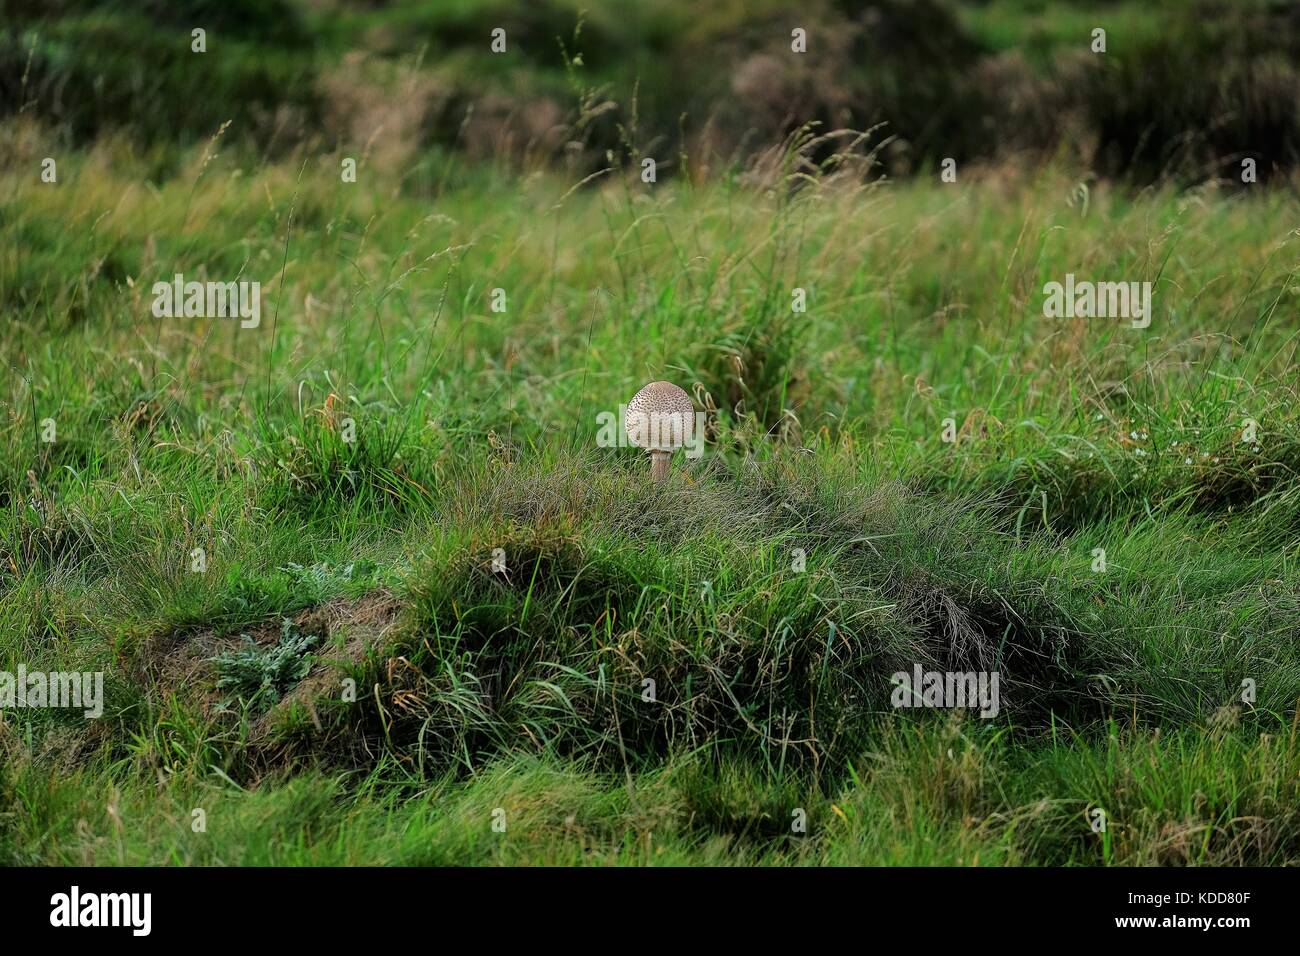 mushroom ball in grass Stock Photo